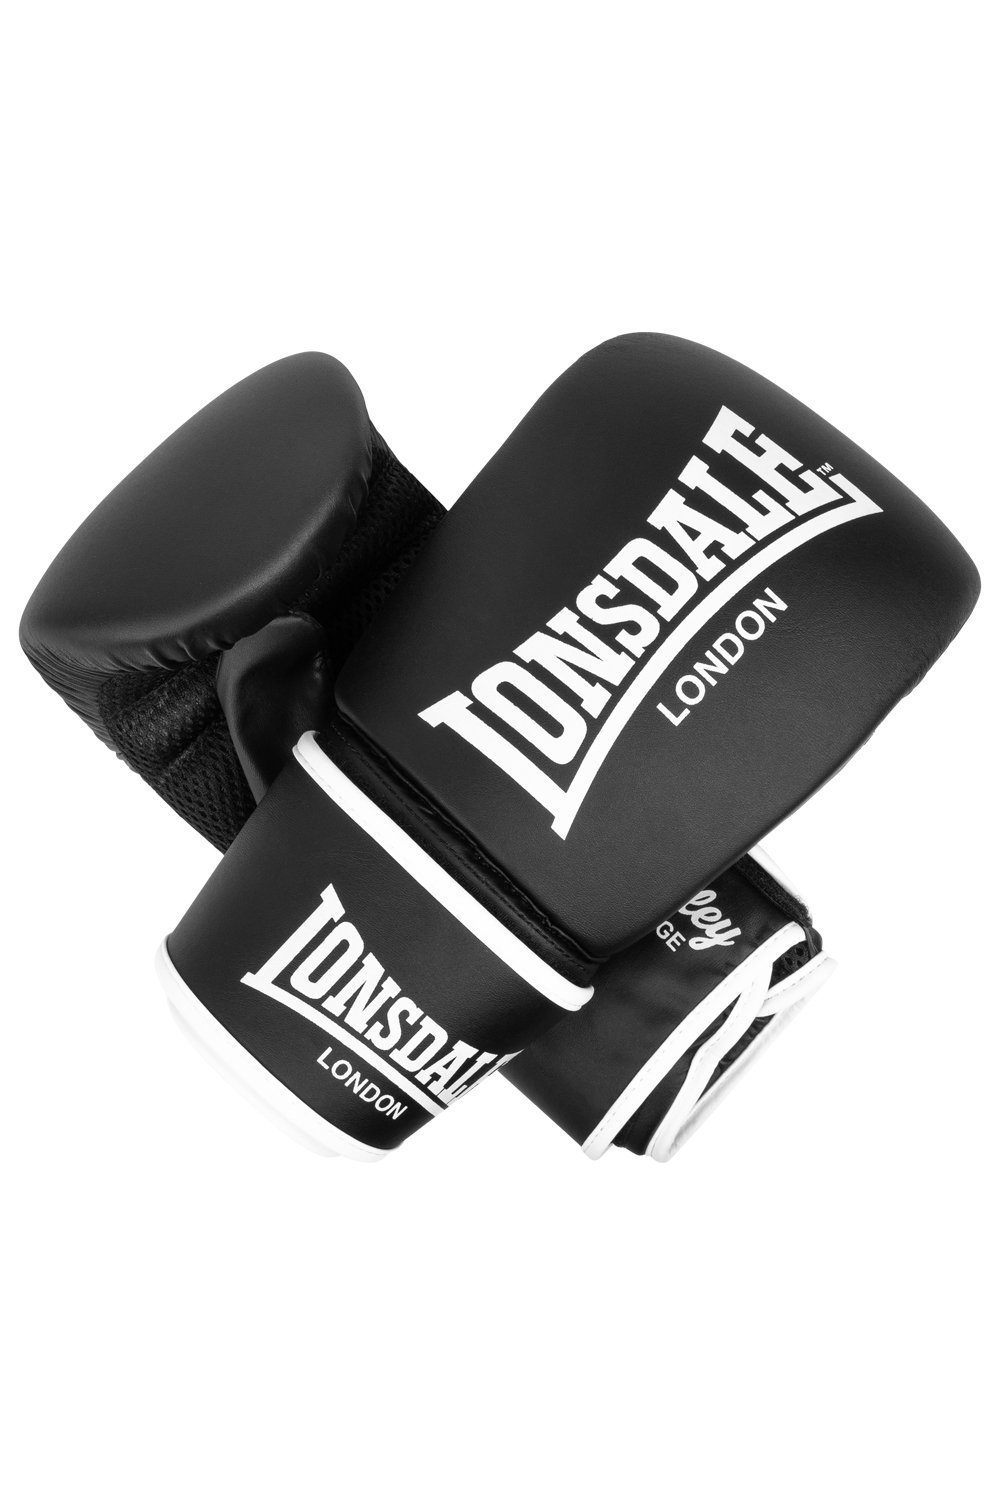 Lonsdale BARLEY Boxhandschuhe Black/White